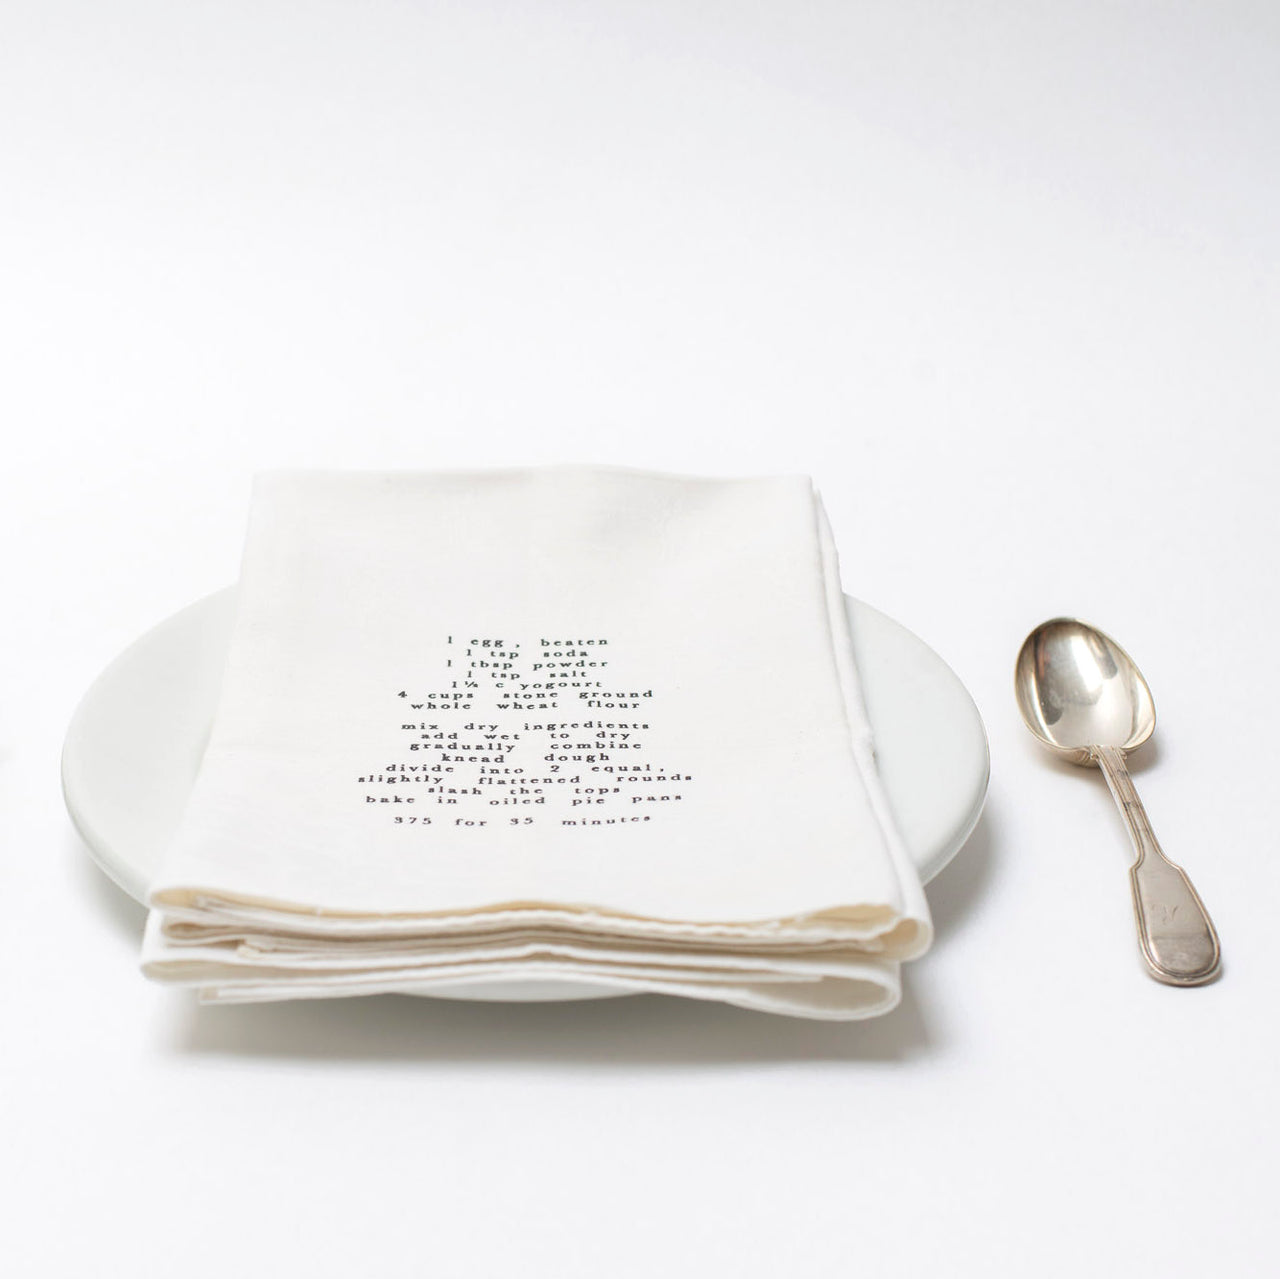 vintage damask napkins with recipe